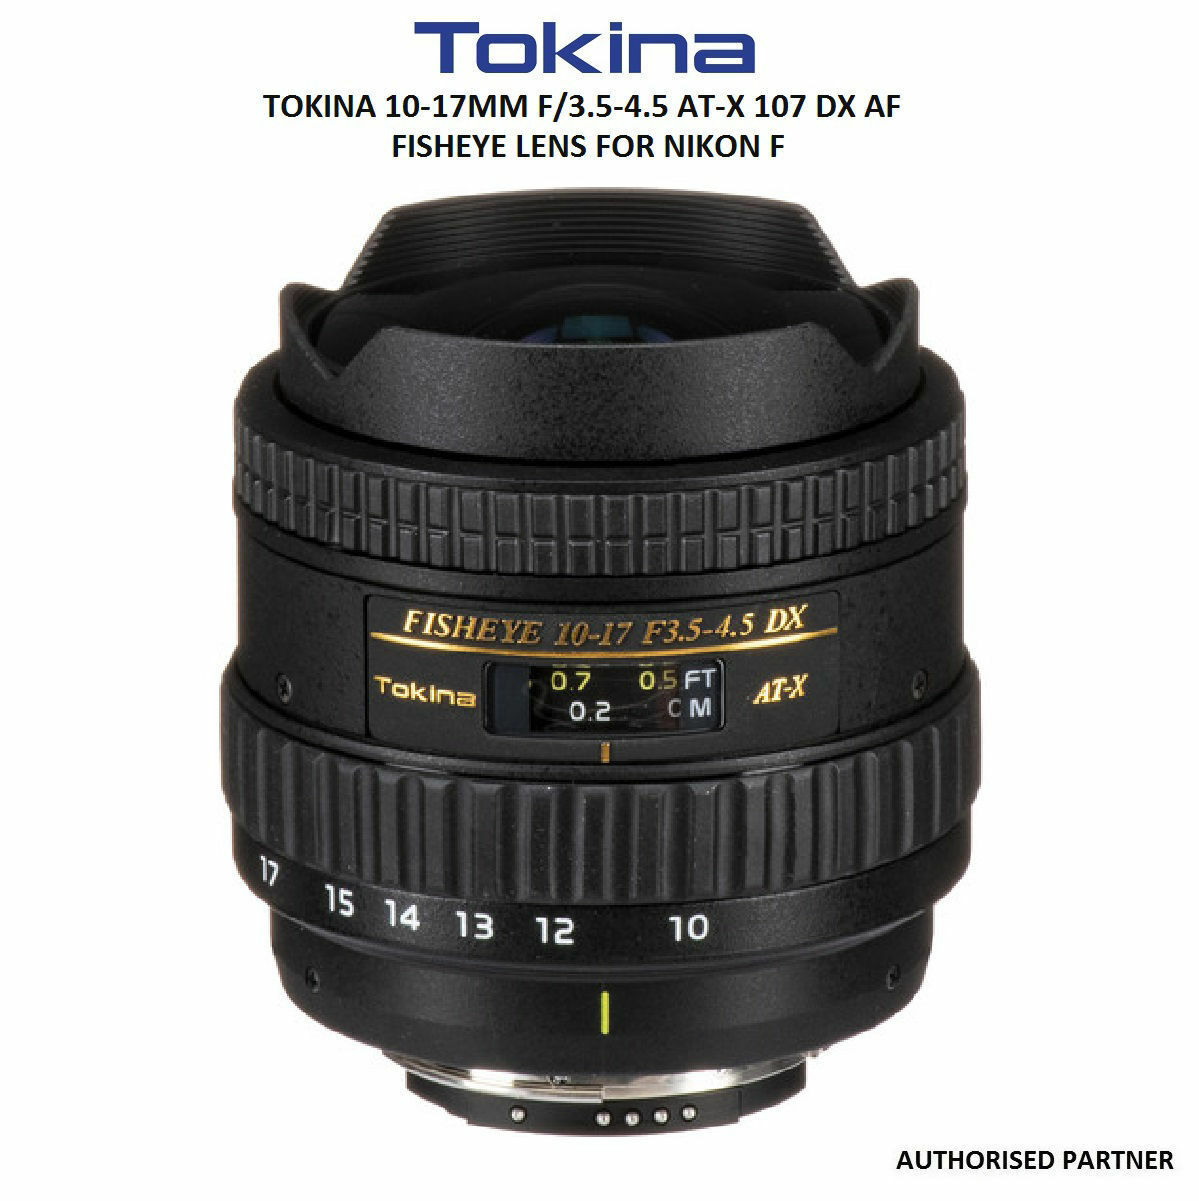 Tokina AT-X Fisheye 10-17mm F3.5-4.5 DX-www.steffen.com.br